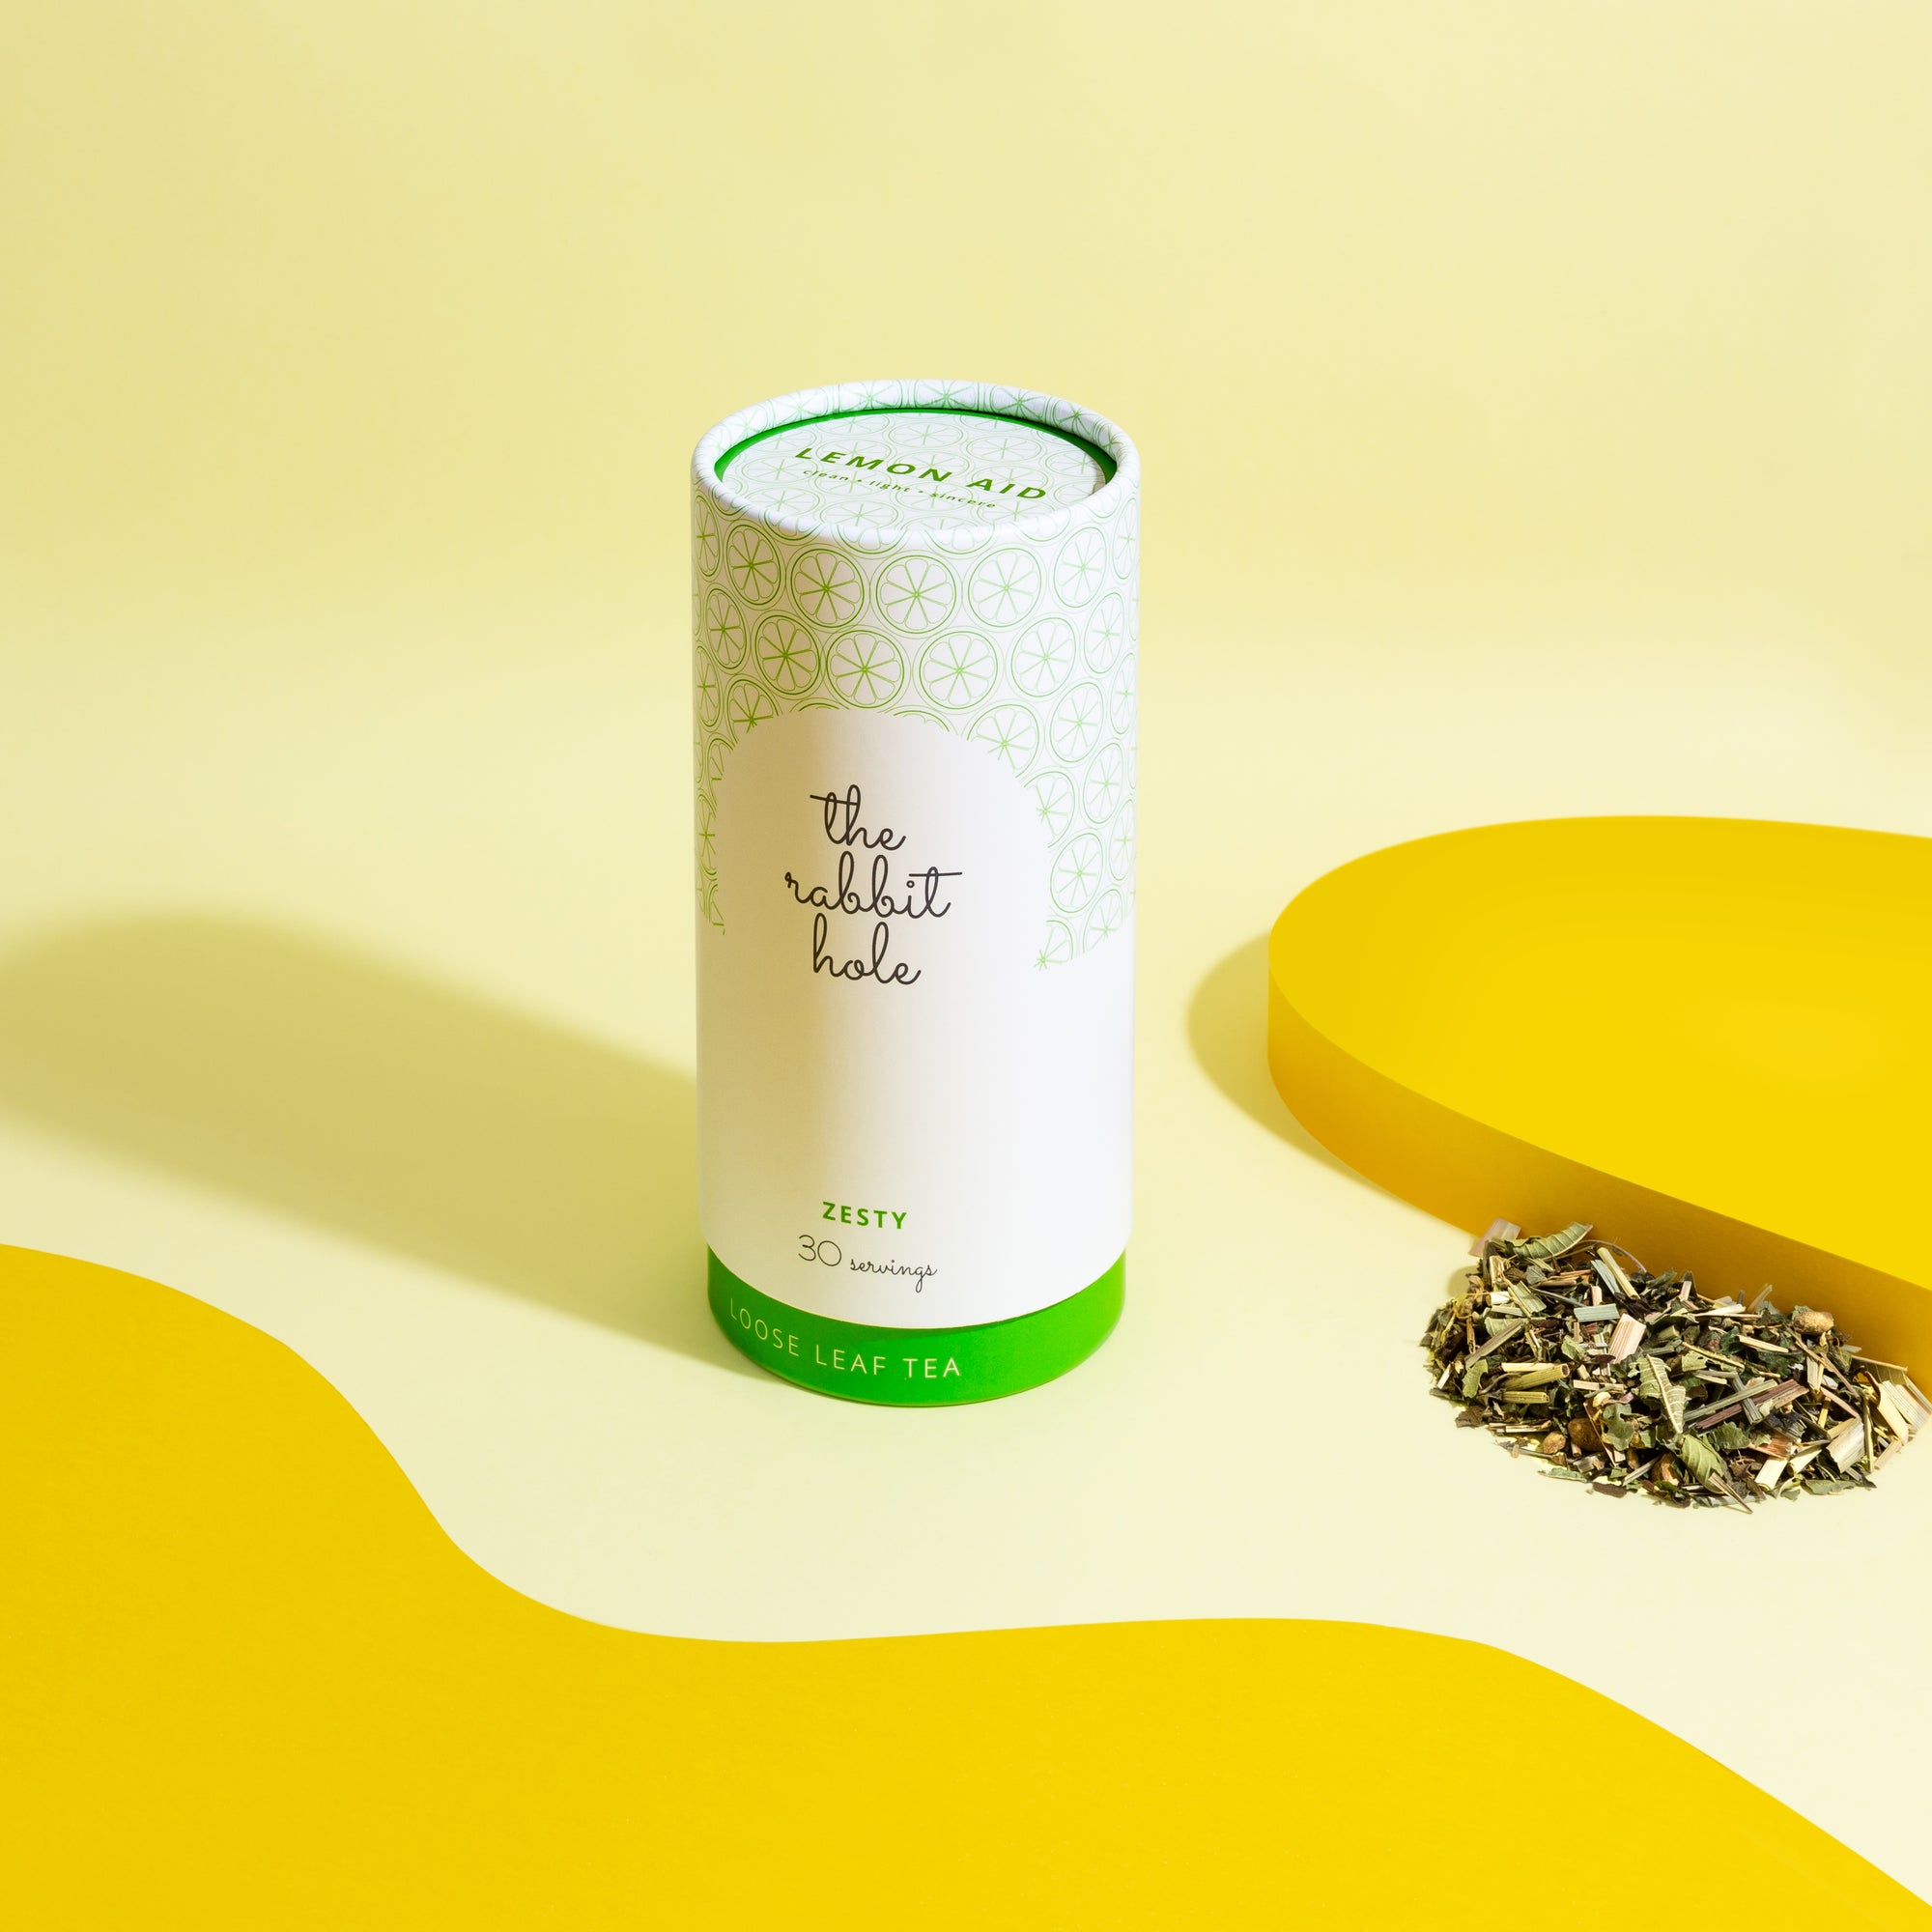 Lemon Aid loose leaf tea by The Rabbit Hole - Australian Made Tea. Tea canister on colourful yellow background